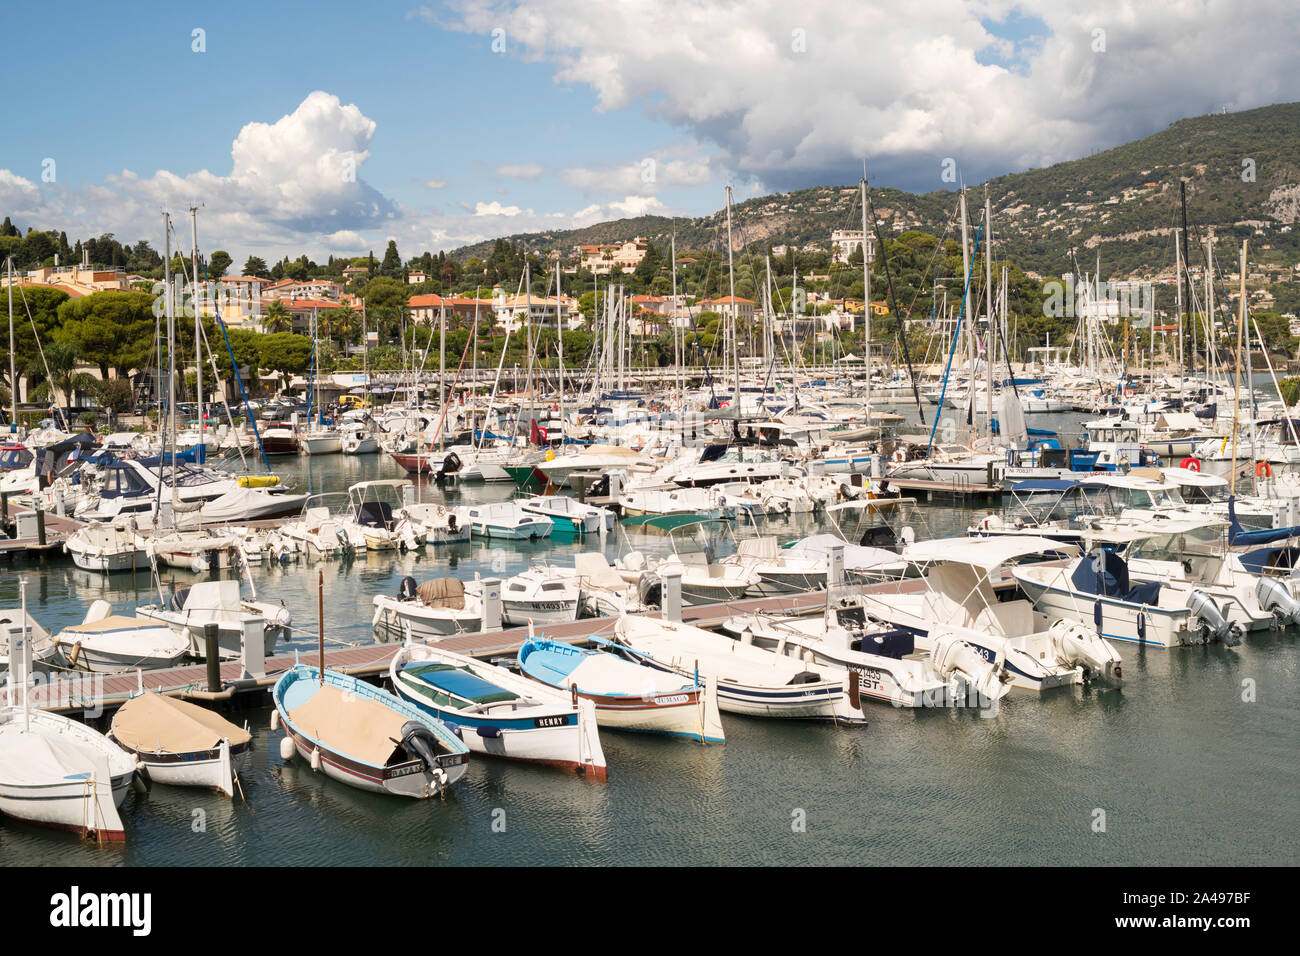 Boats moored in the marina, Saint Jean Cap Ferrat, France Europe Stock Photo